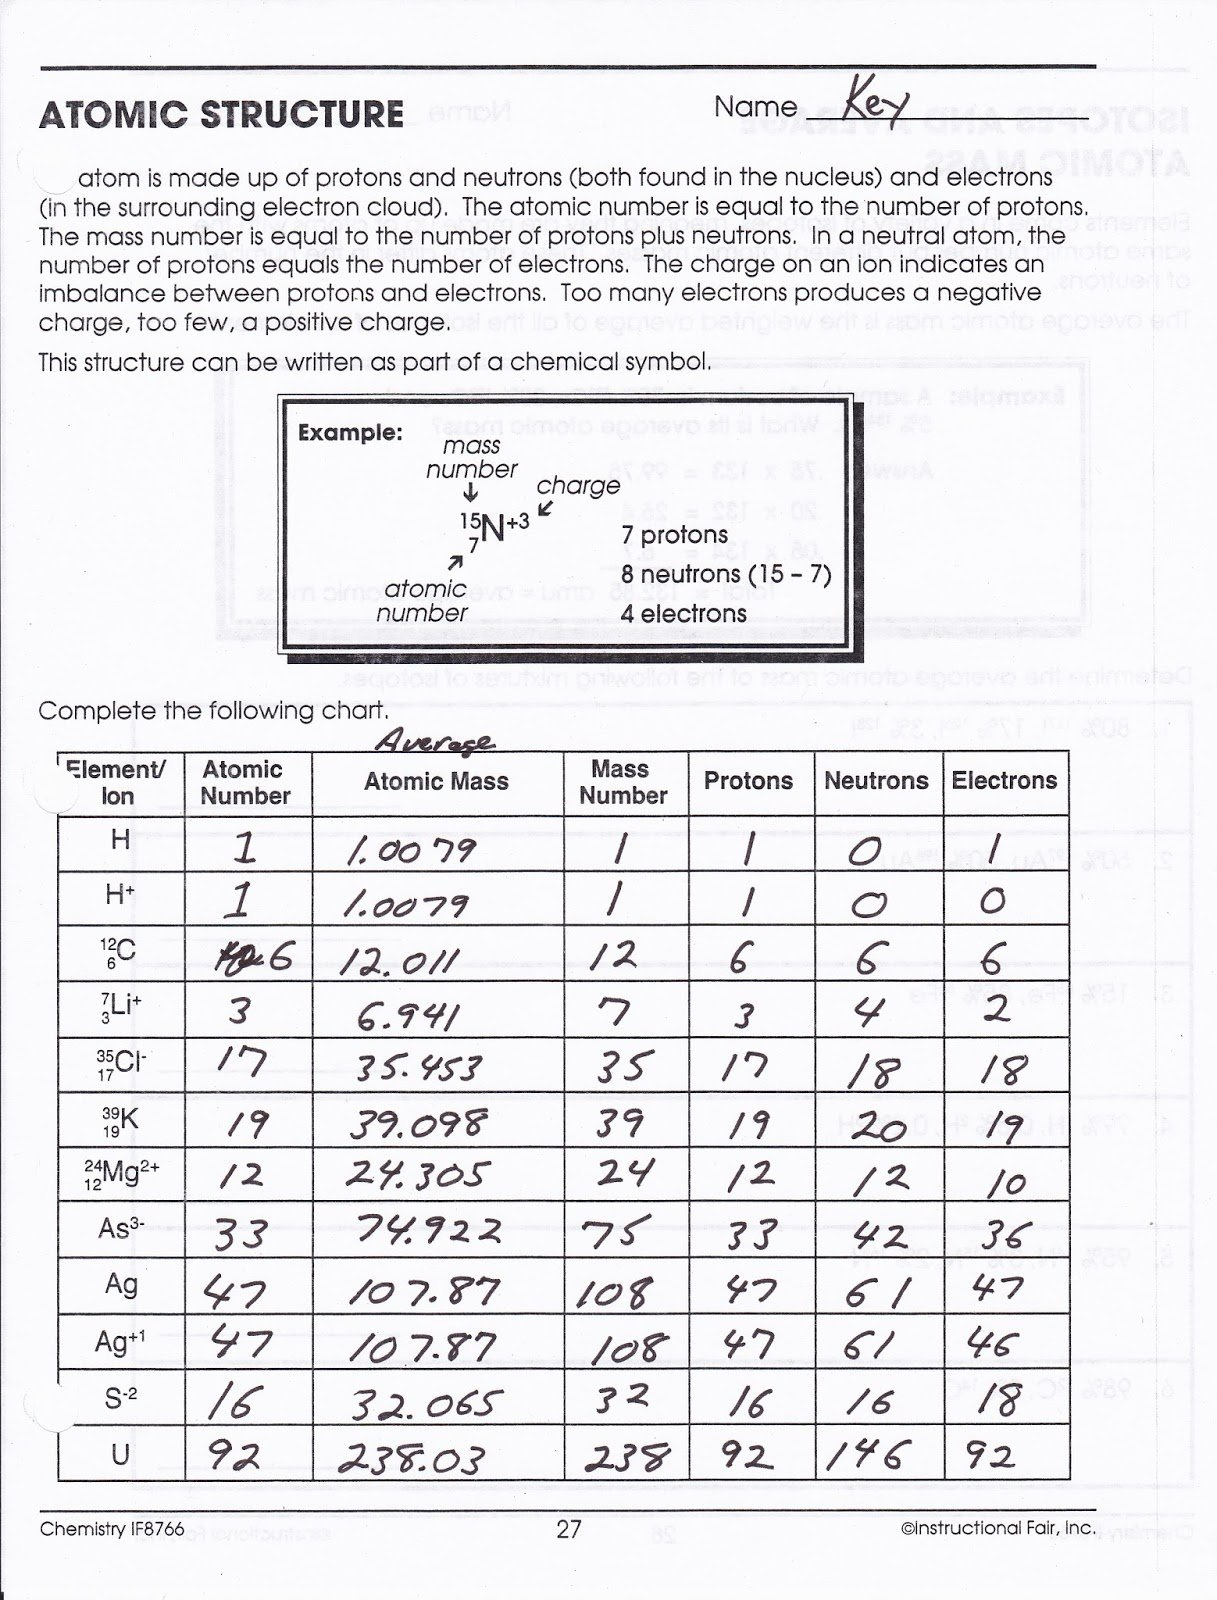 Atomic Structure Worksheet Answer Key Math Worksheets For Grade 1 Intended For Atomic Structure Worksheet Answer Key